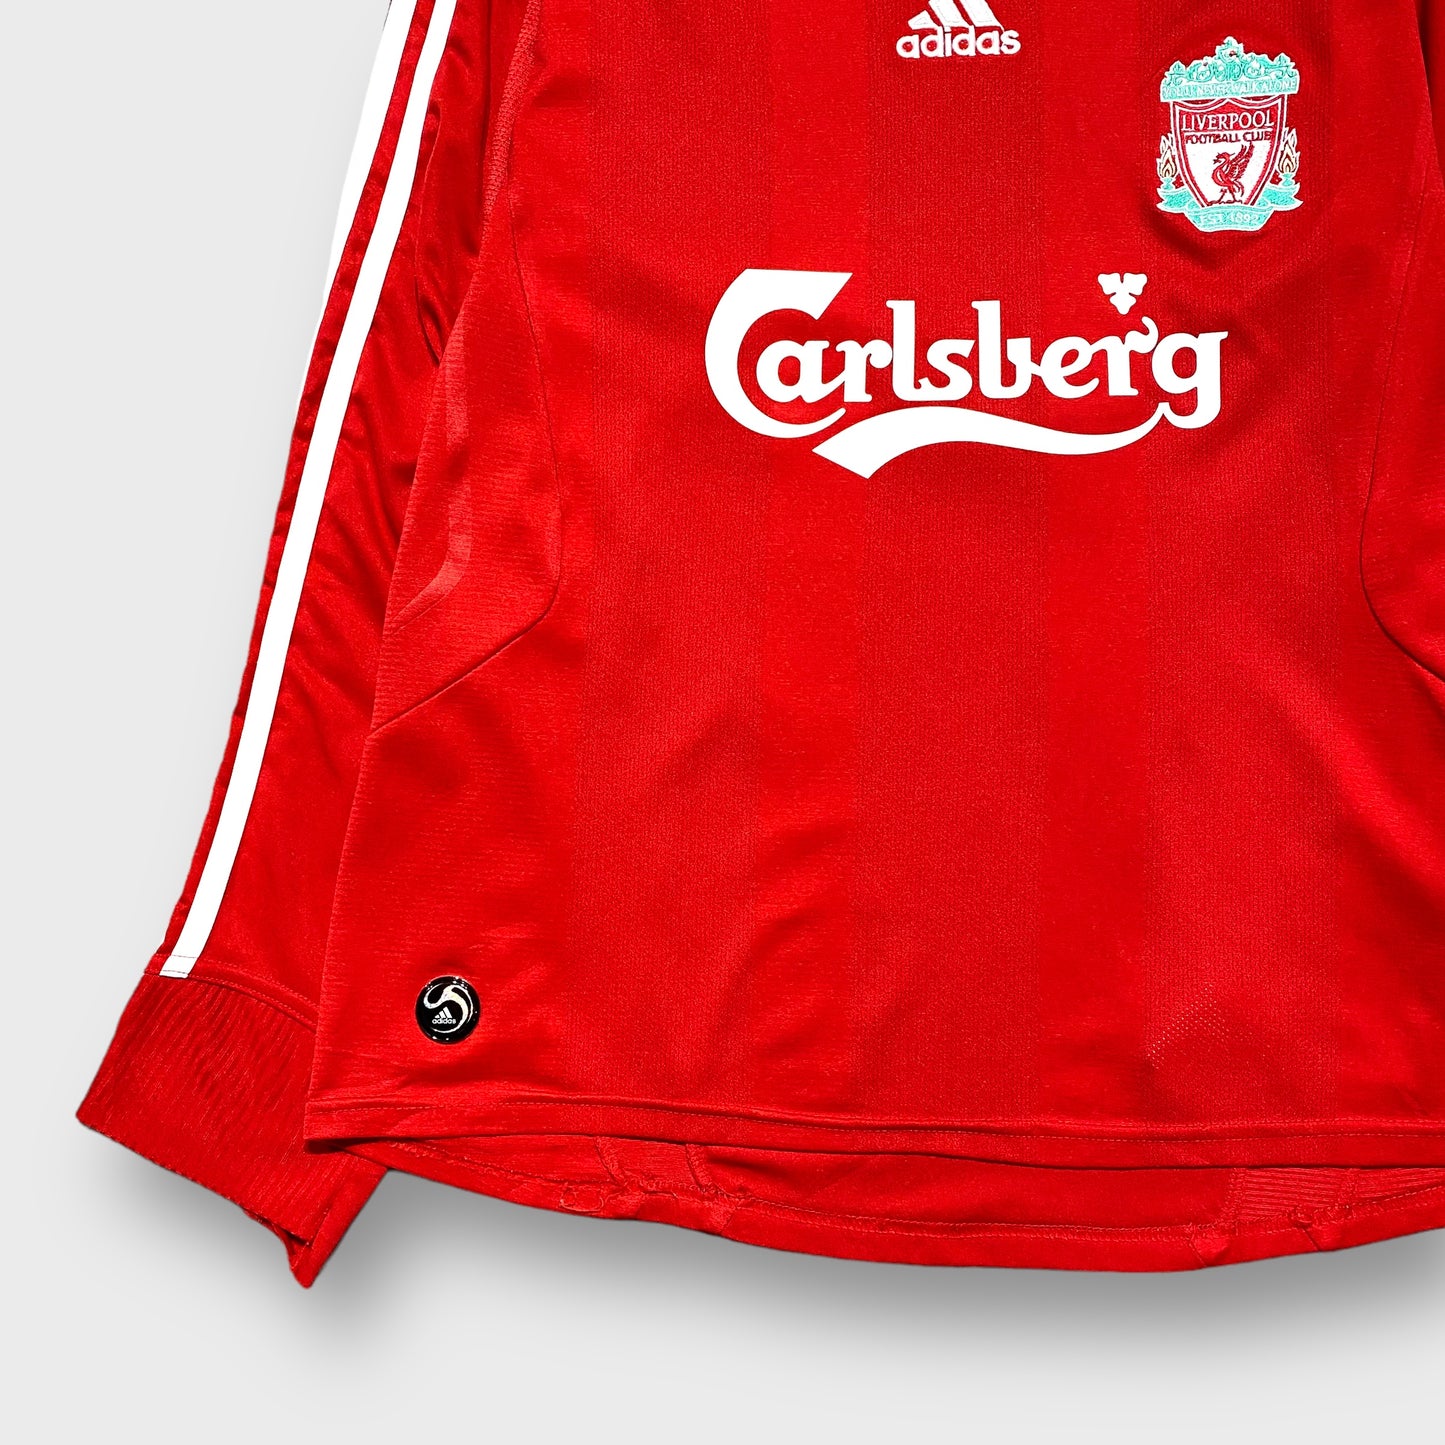 2008/2009 "adidas" Liverpool game shirt